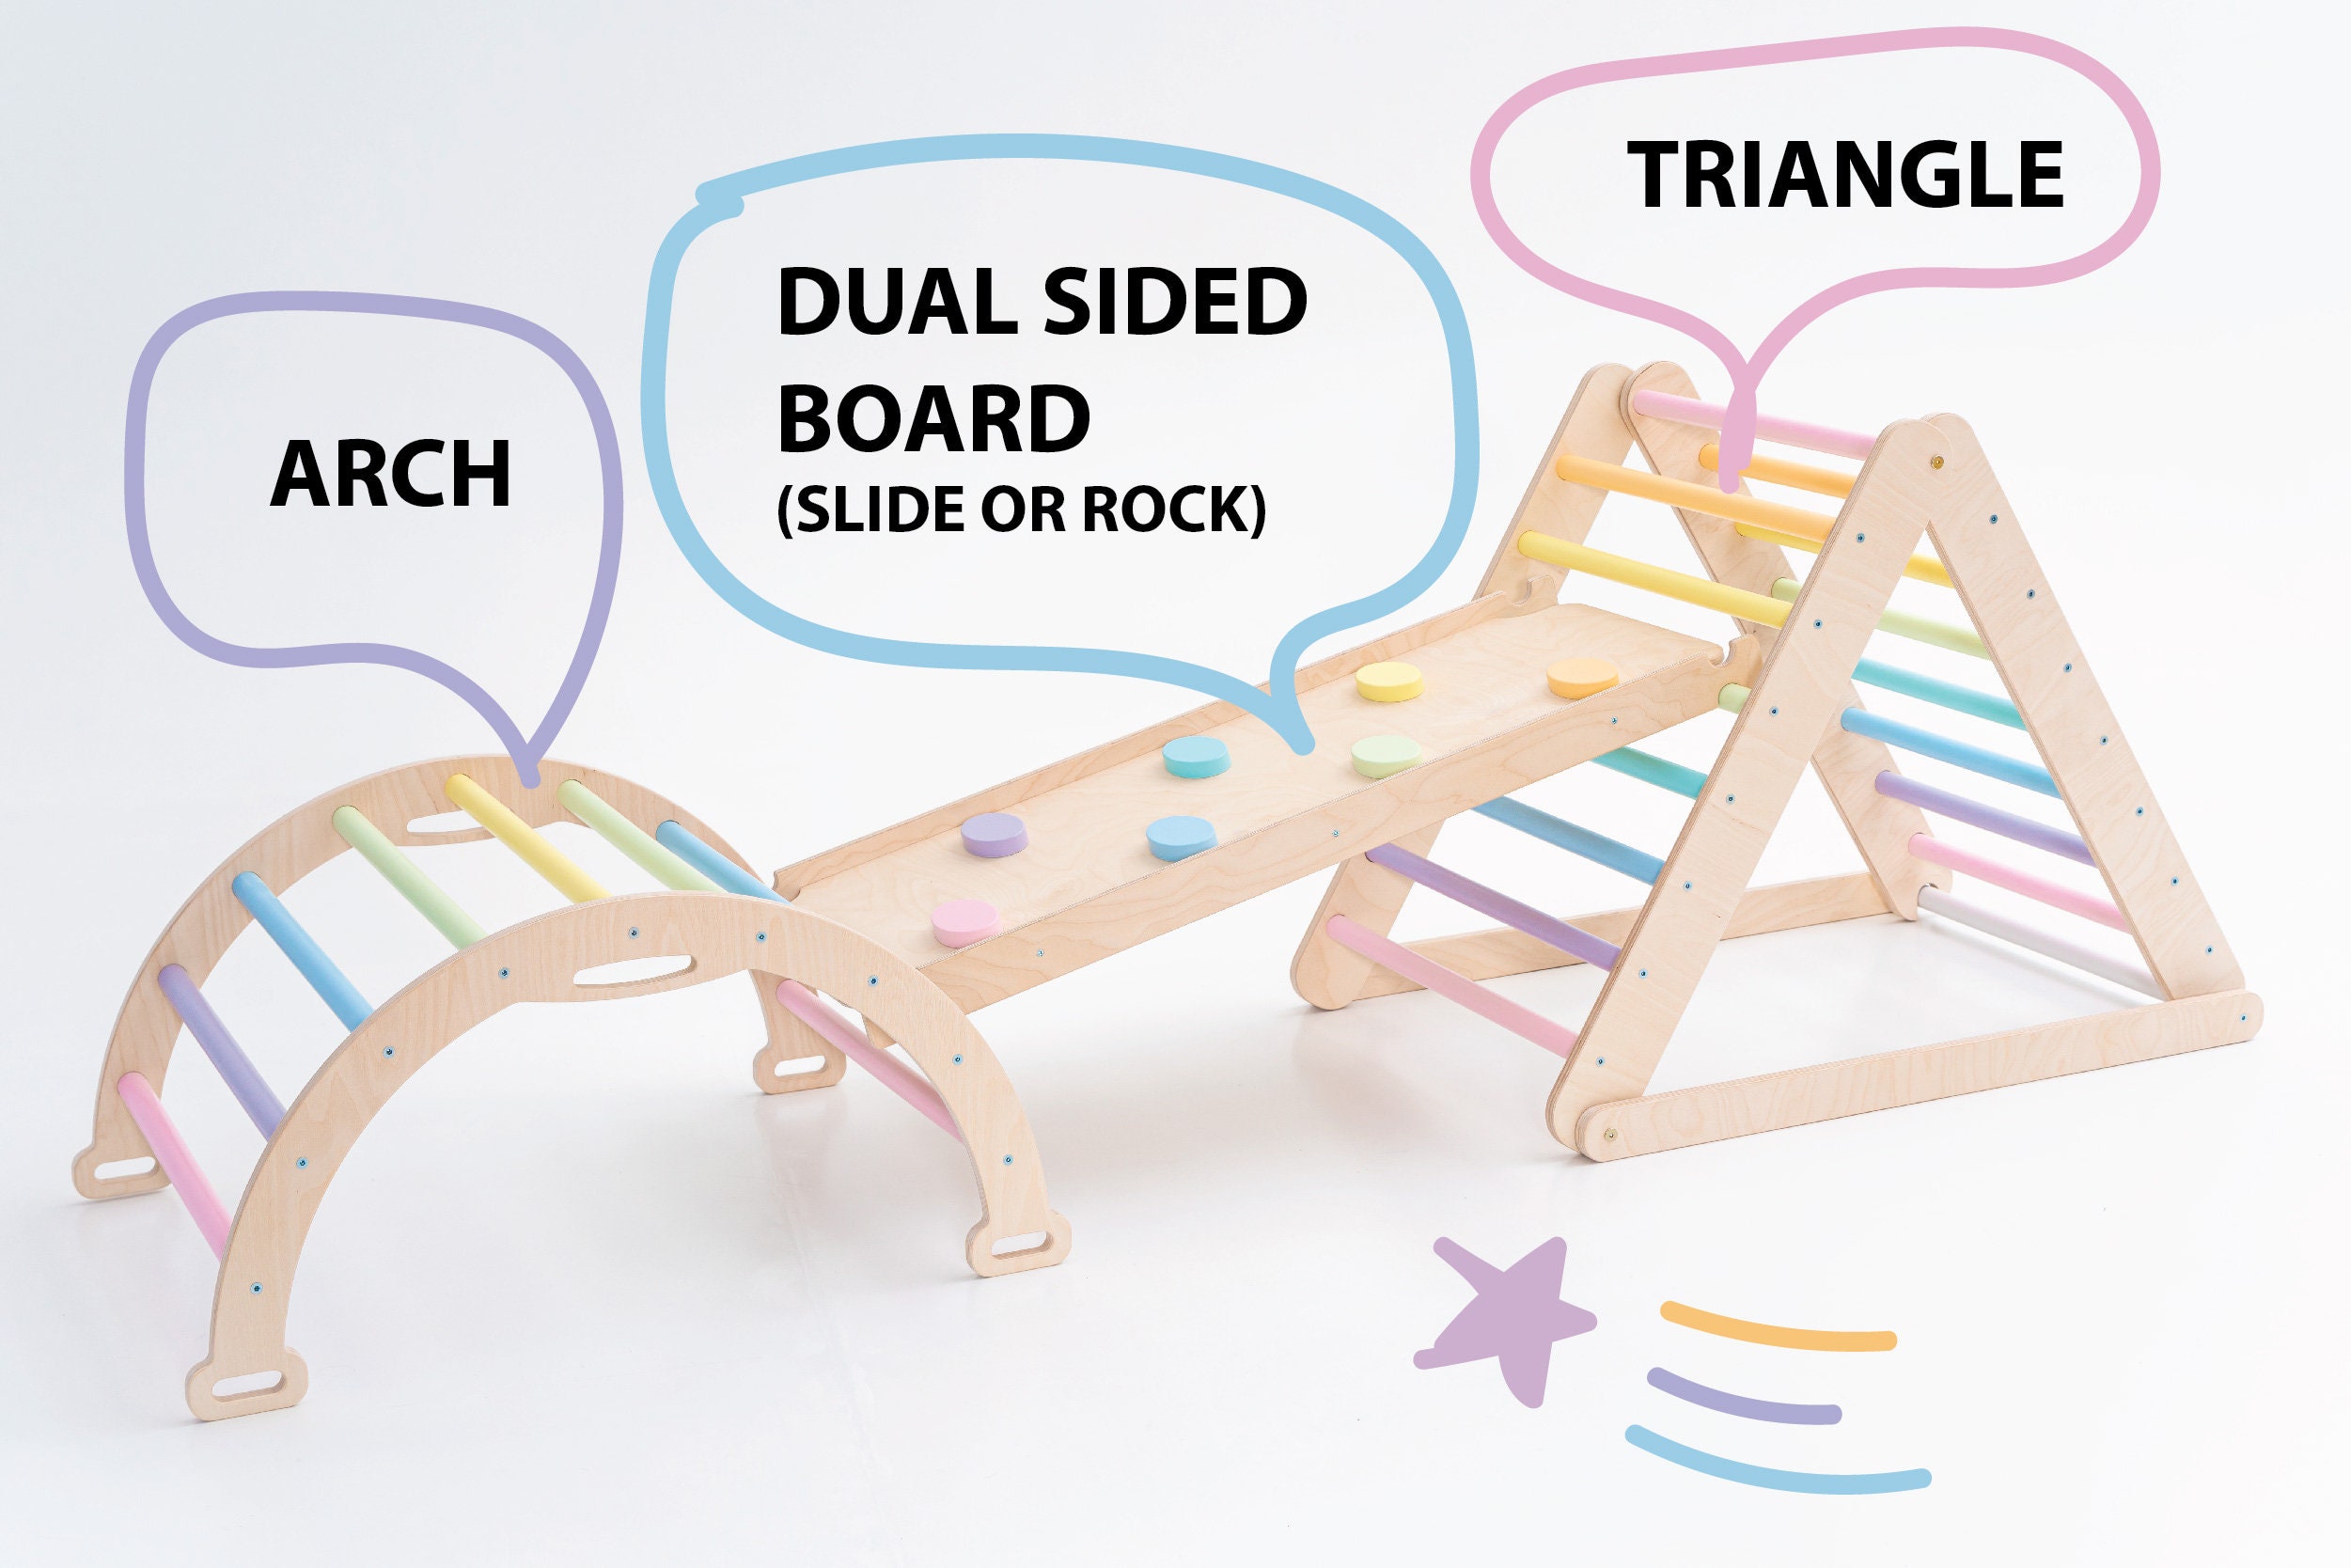 Nursery Ladder Pastel Rainbow, Learn • Play • Evolve